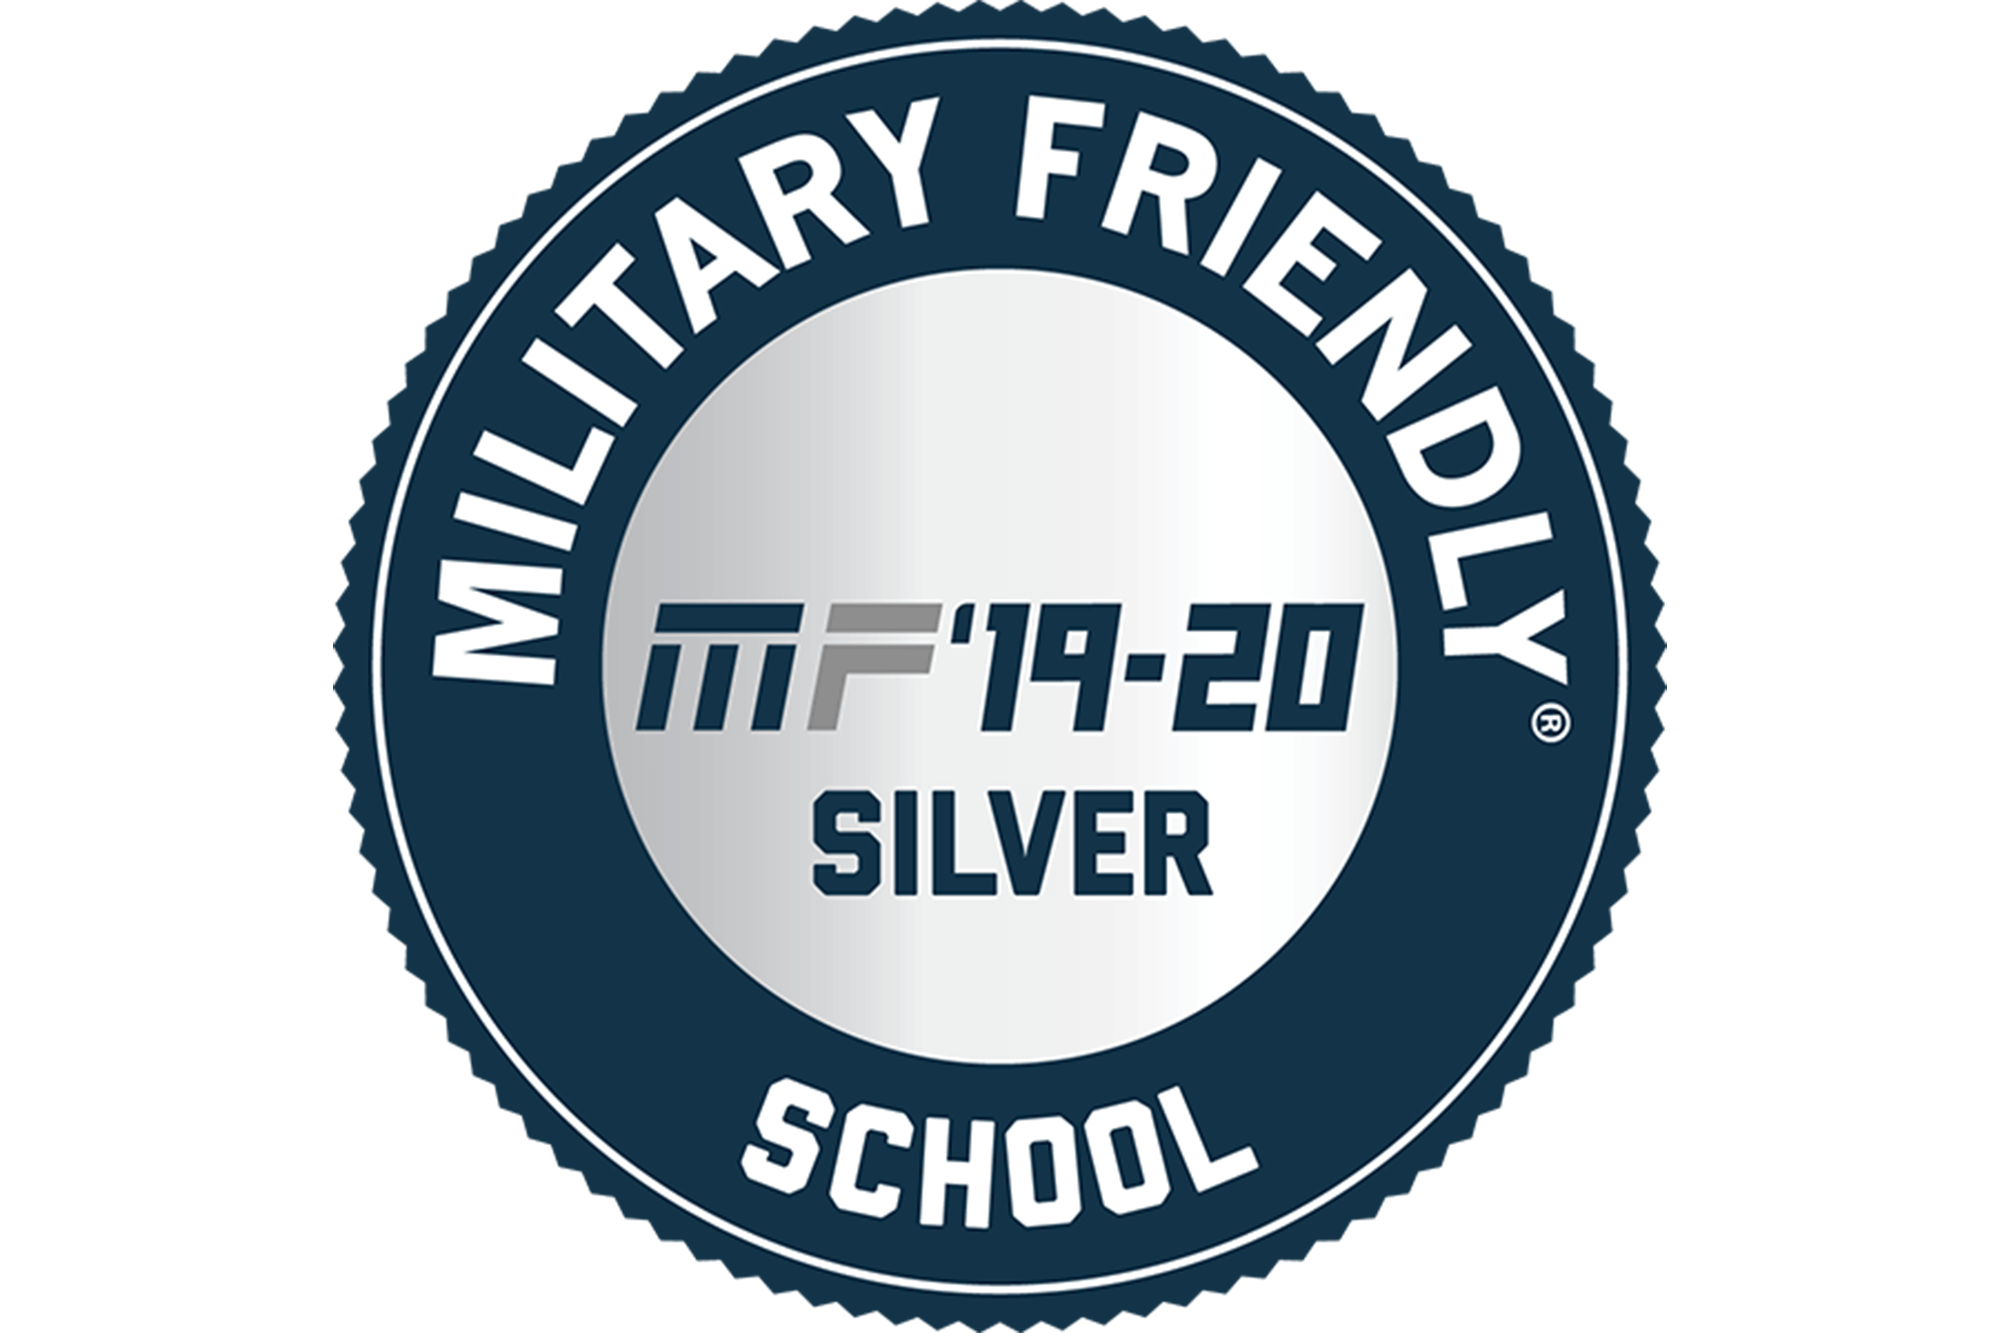 Image of the Military Friendly silver school designation logo.